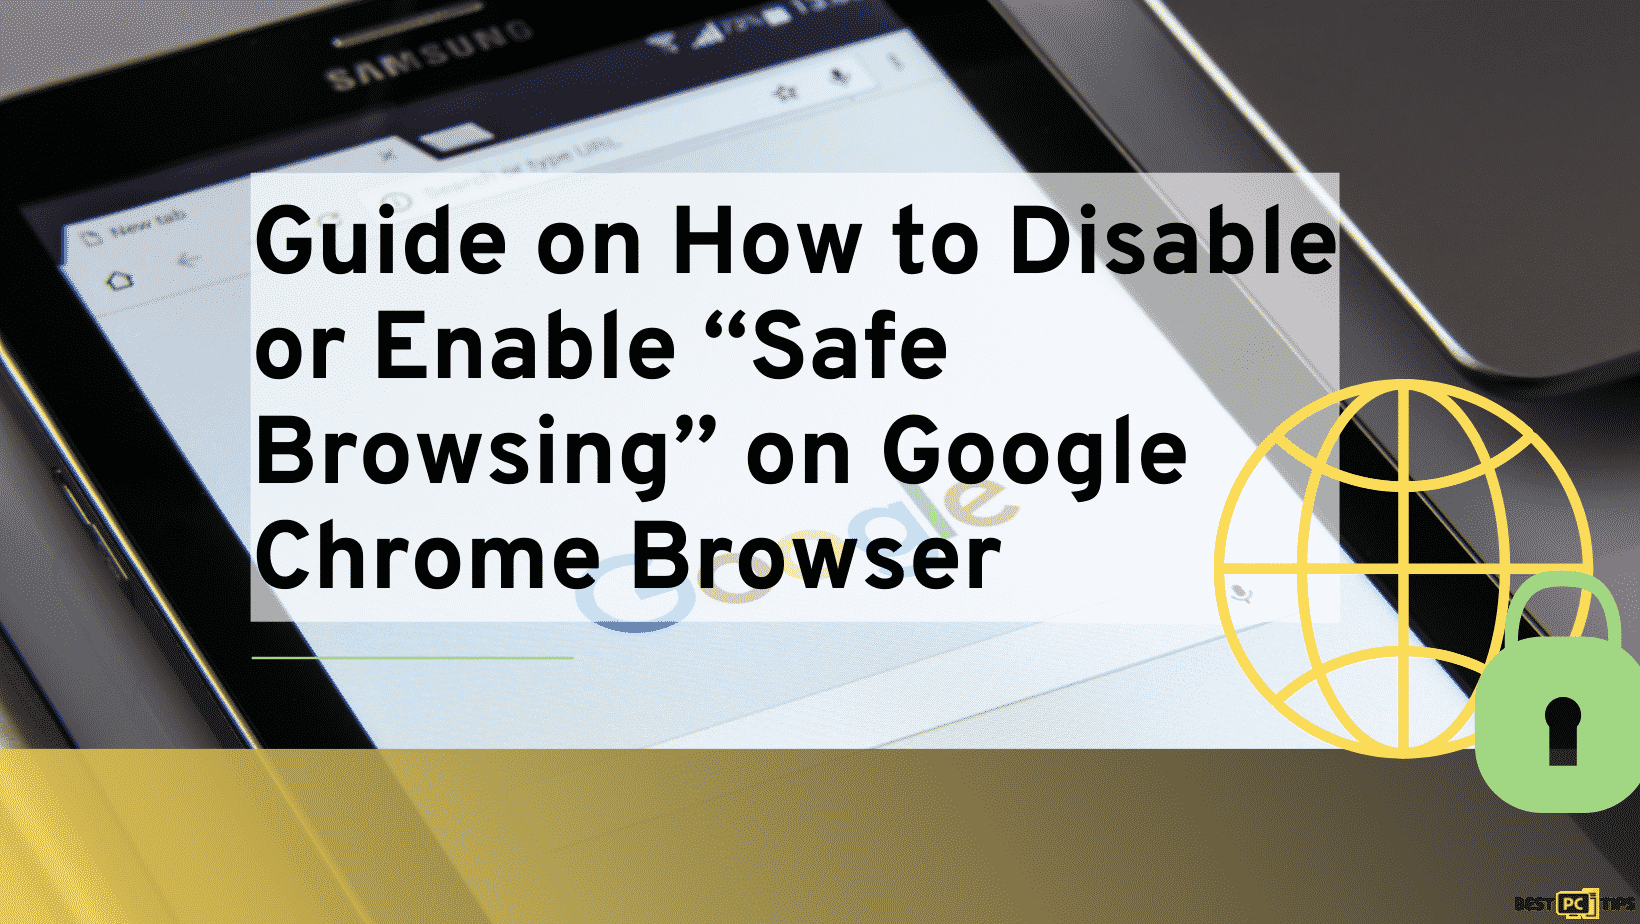 safe browsing on google chrome enable and disable